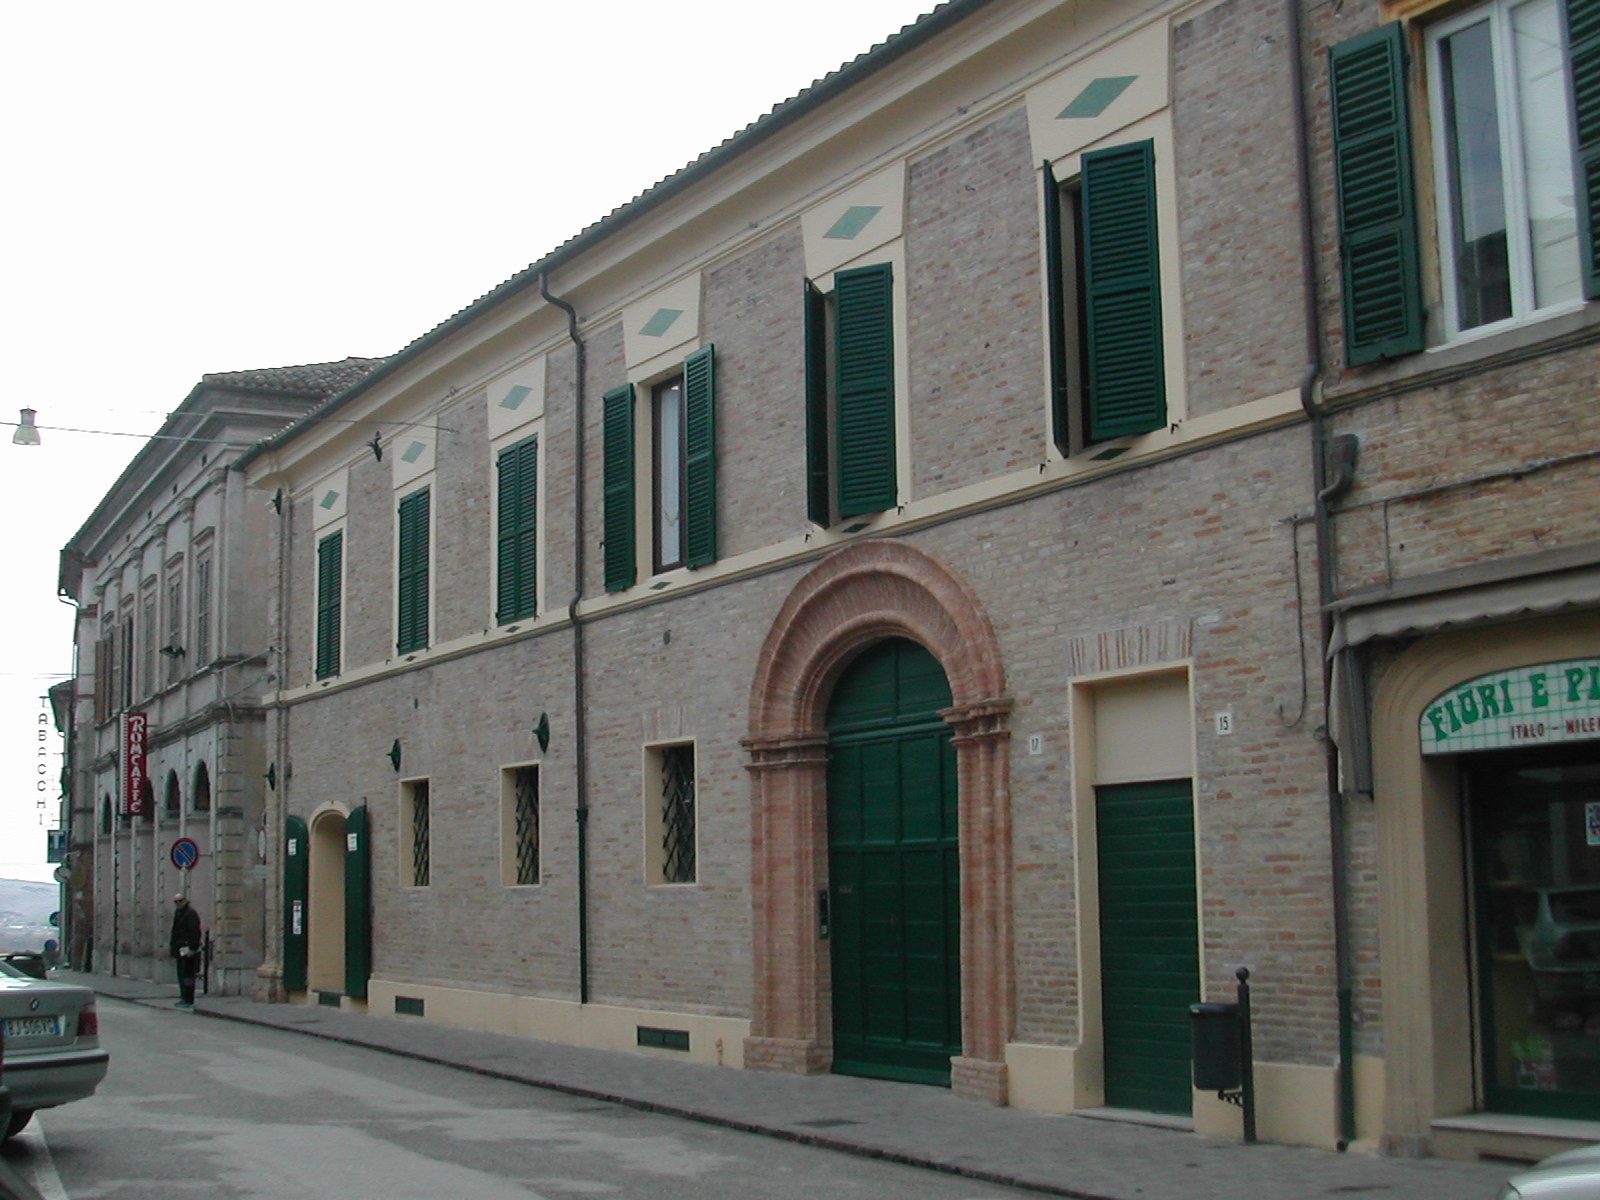 Palazzo signorile (palazzo, signorile) - Montemarciano (AN) 